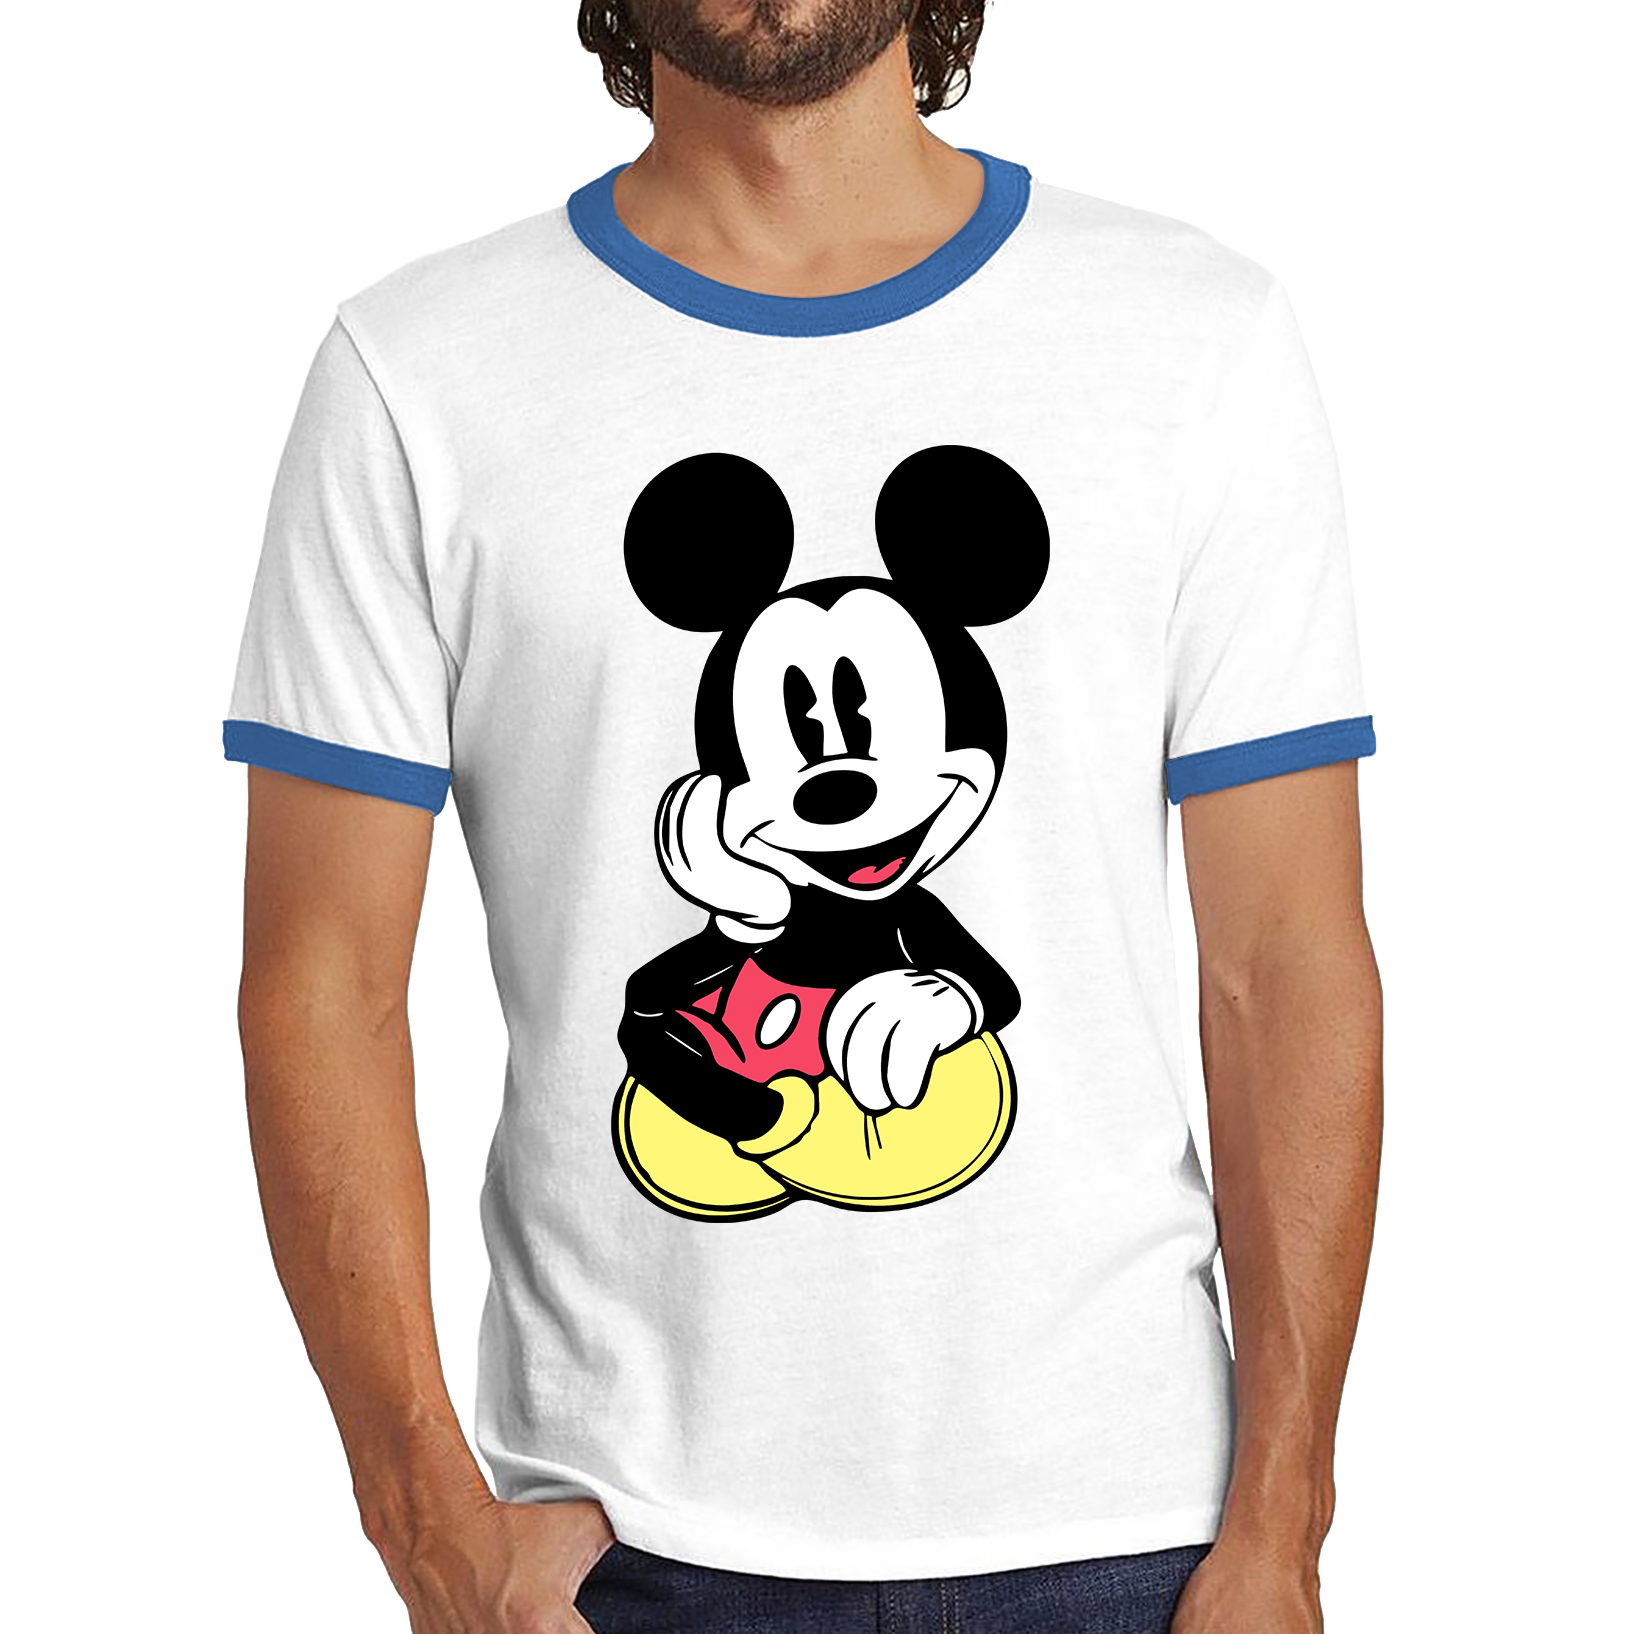 Disney Mickey Mouse Cute And Happy Cartoon Character Disney World Walt Disney Ringer T Shirt